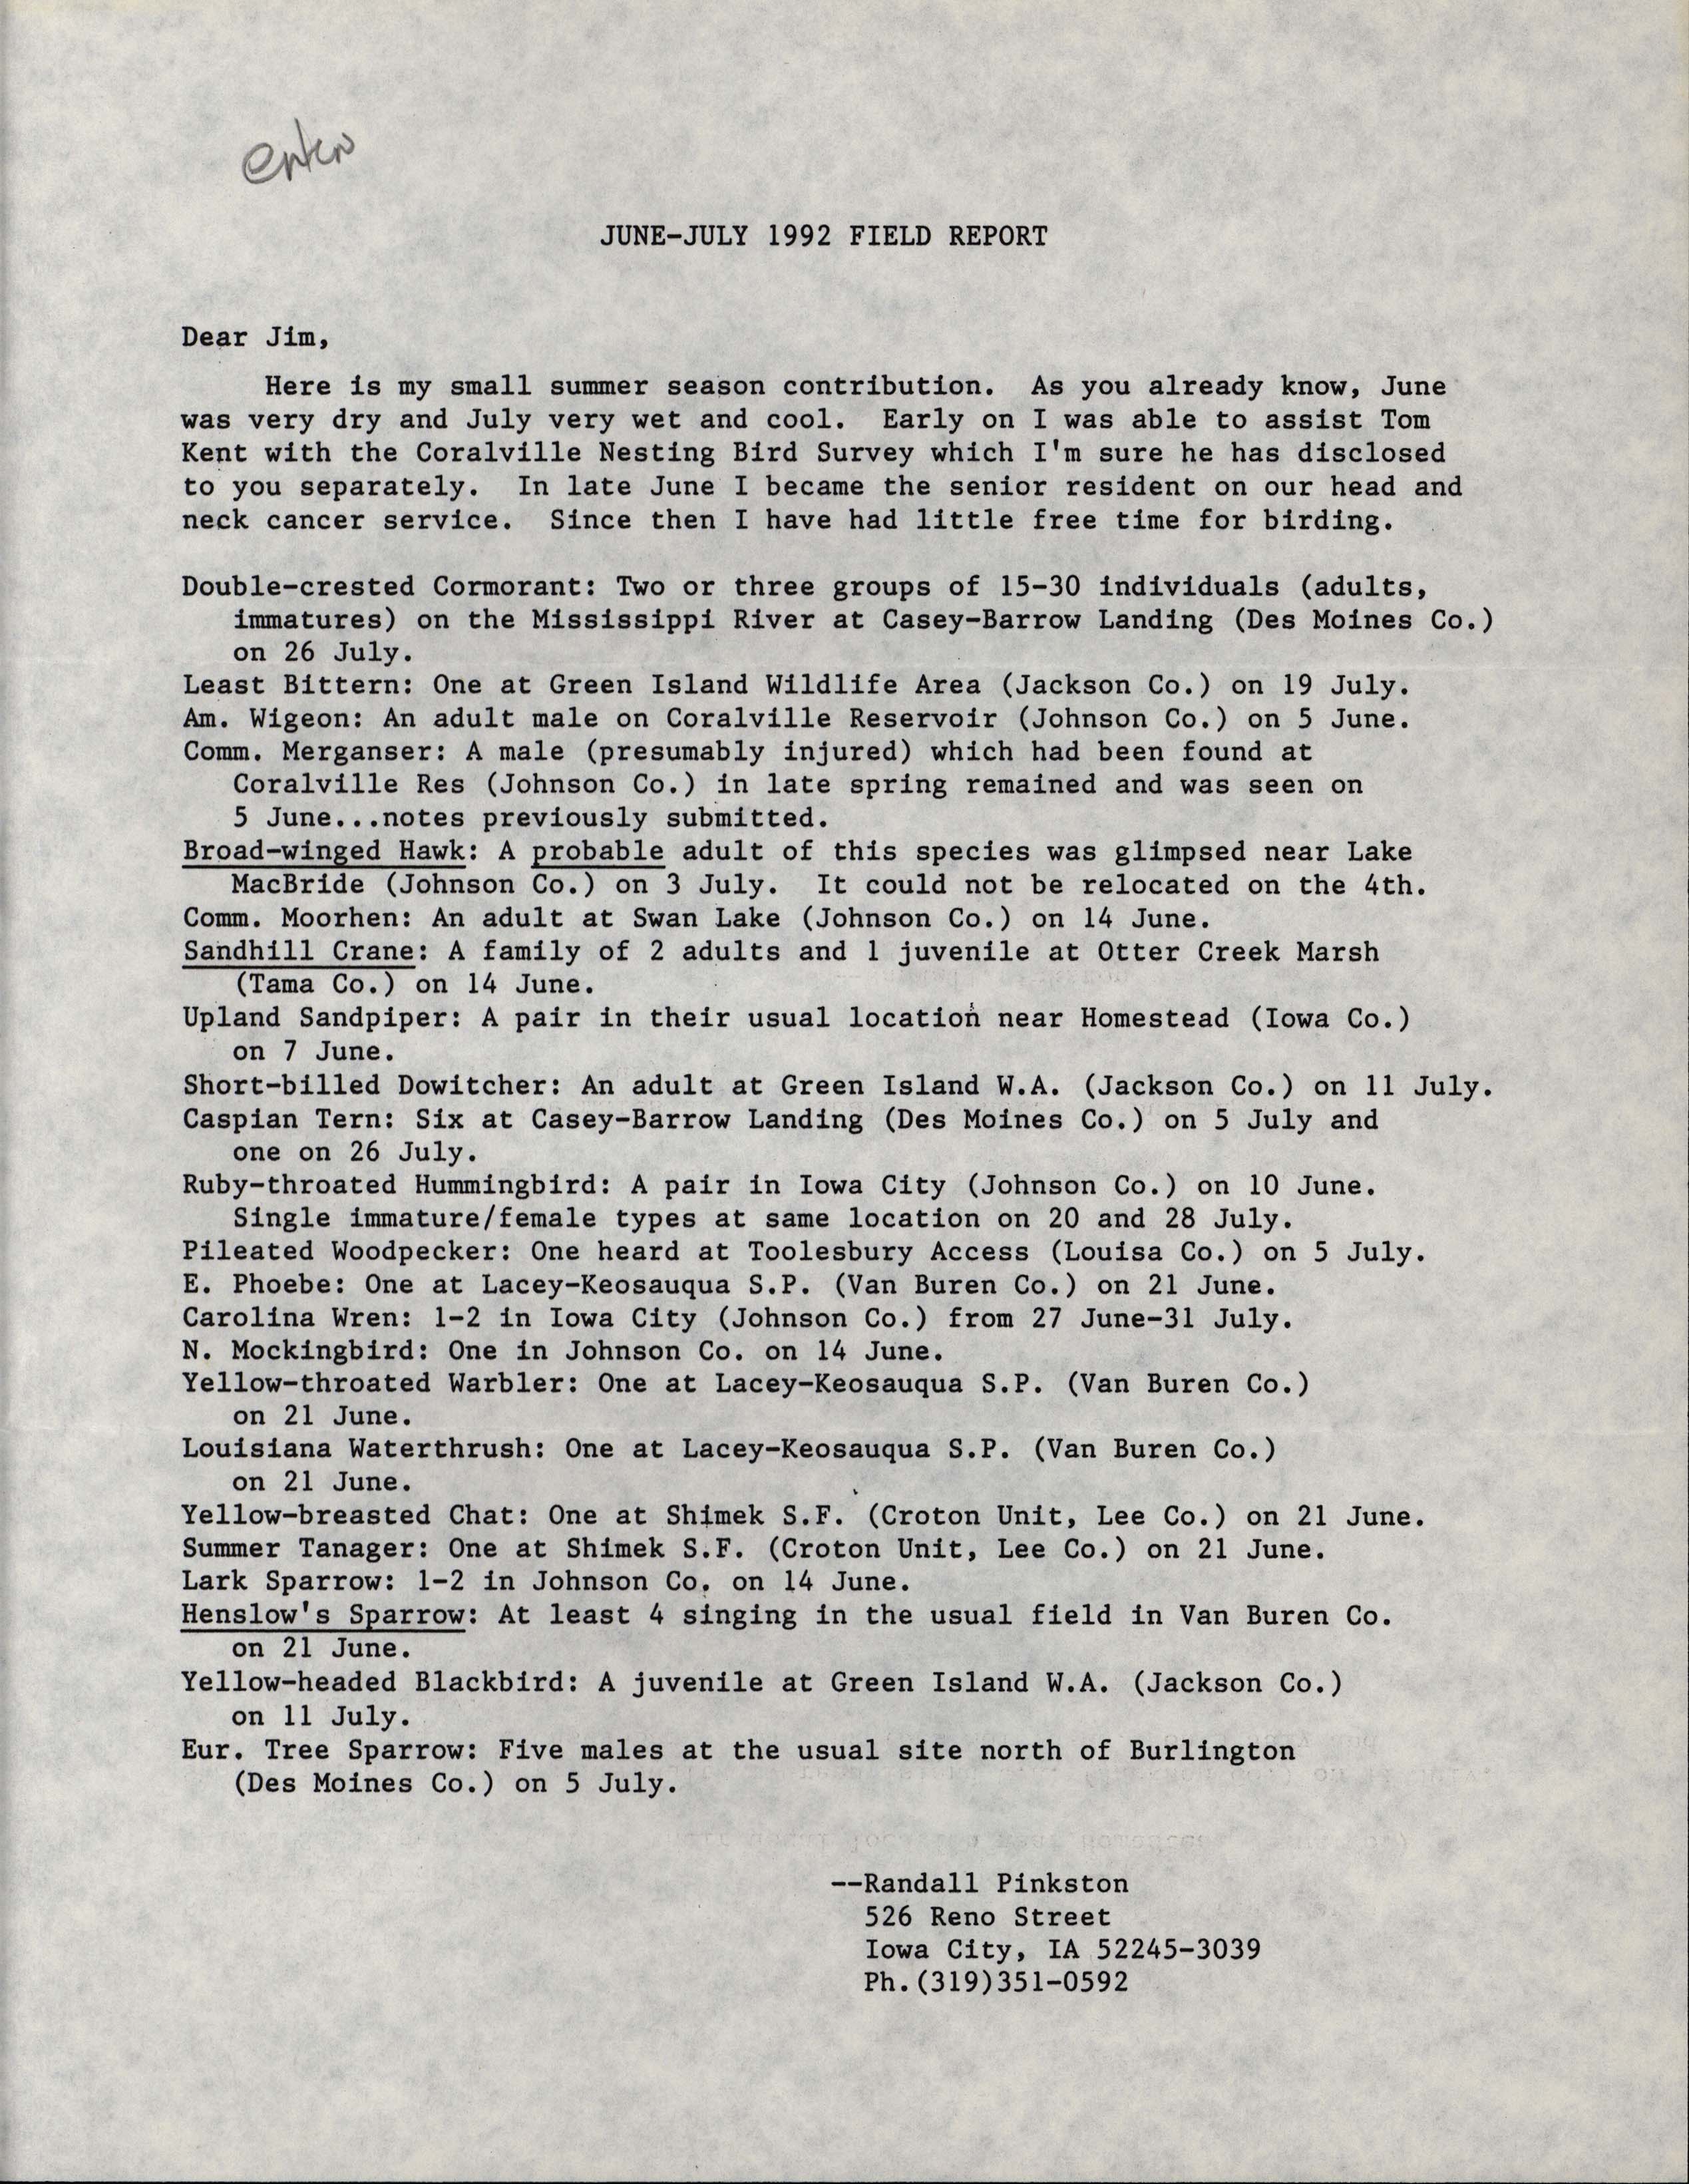 Randall Pinkston letter to James J. Dinsmore regarding summer bird sightings, summer 1992